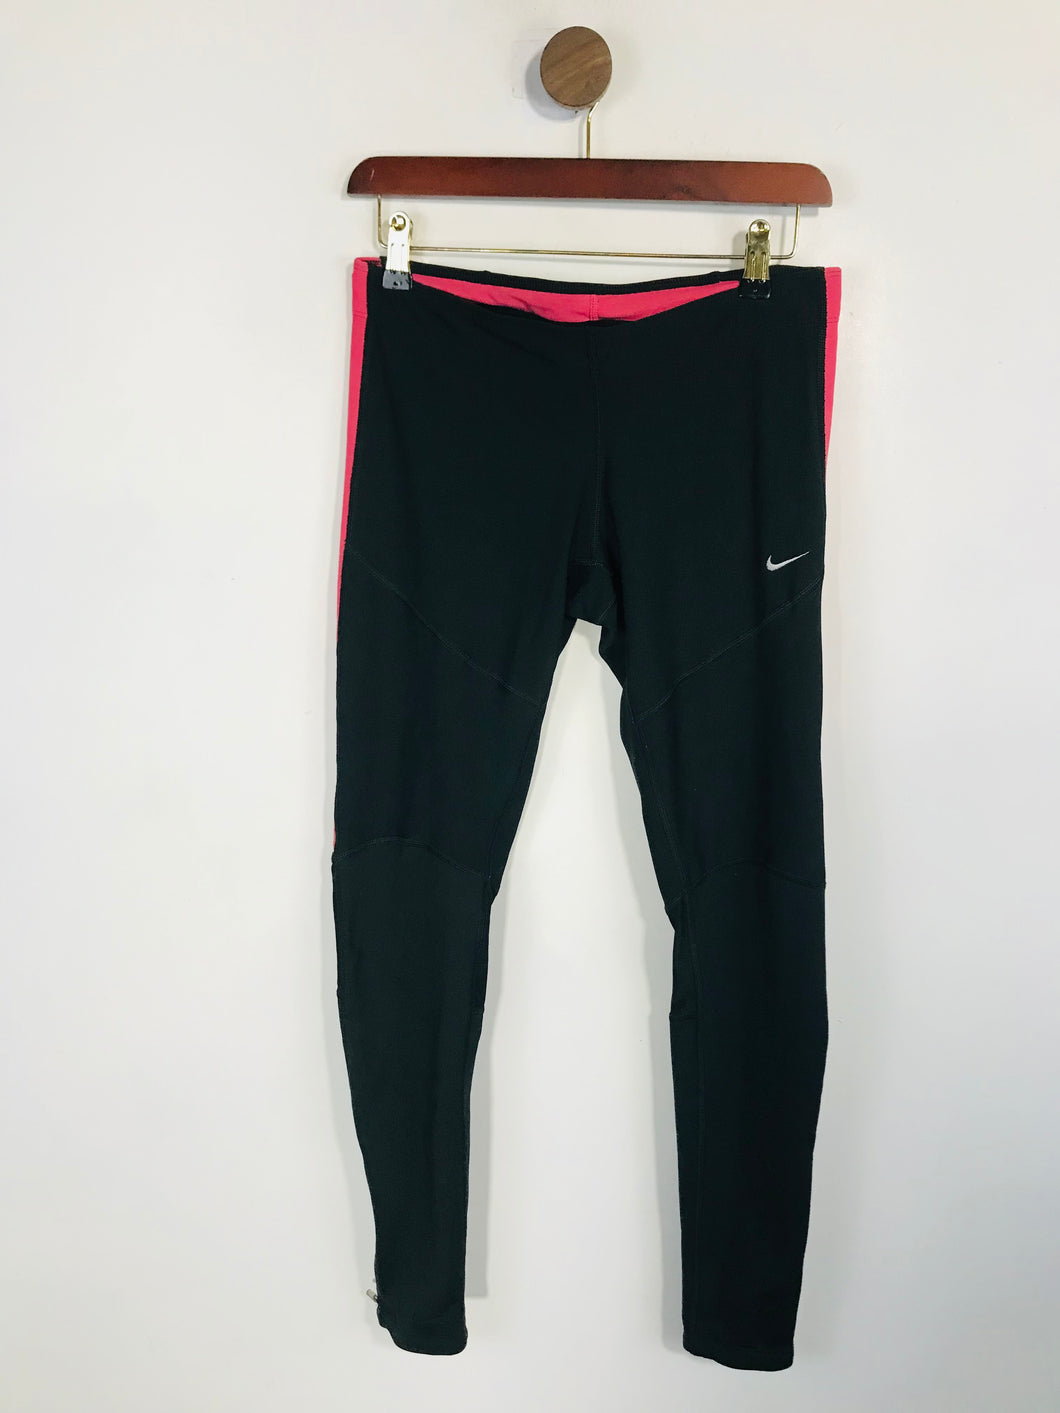 Nike Women's Gym Running Leggings Sports Bottoms | M UK10-12 | Black